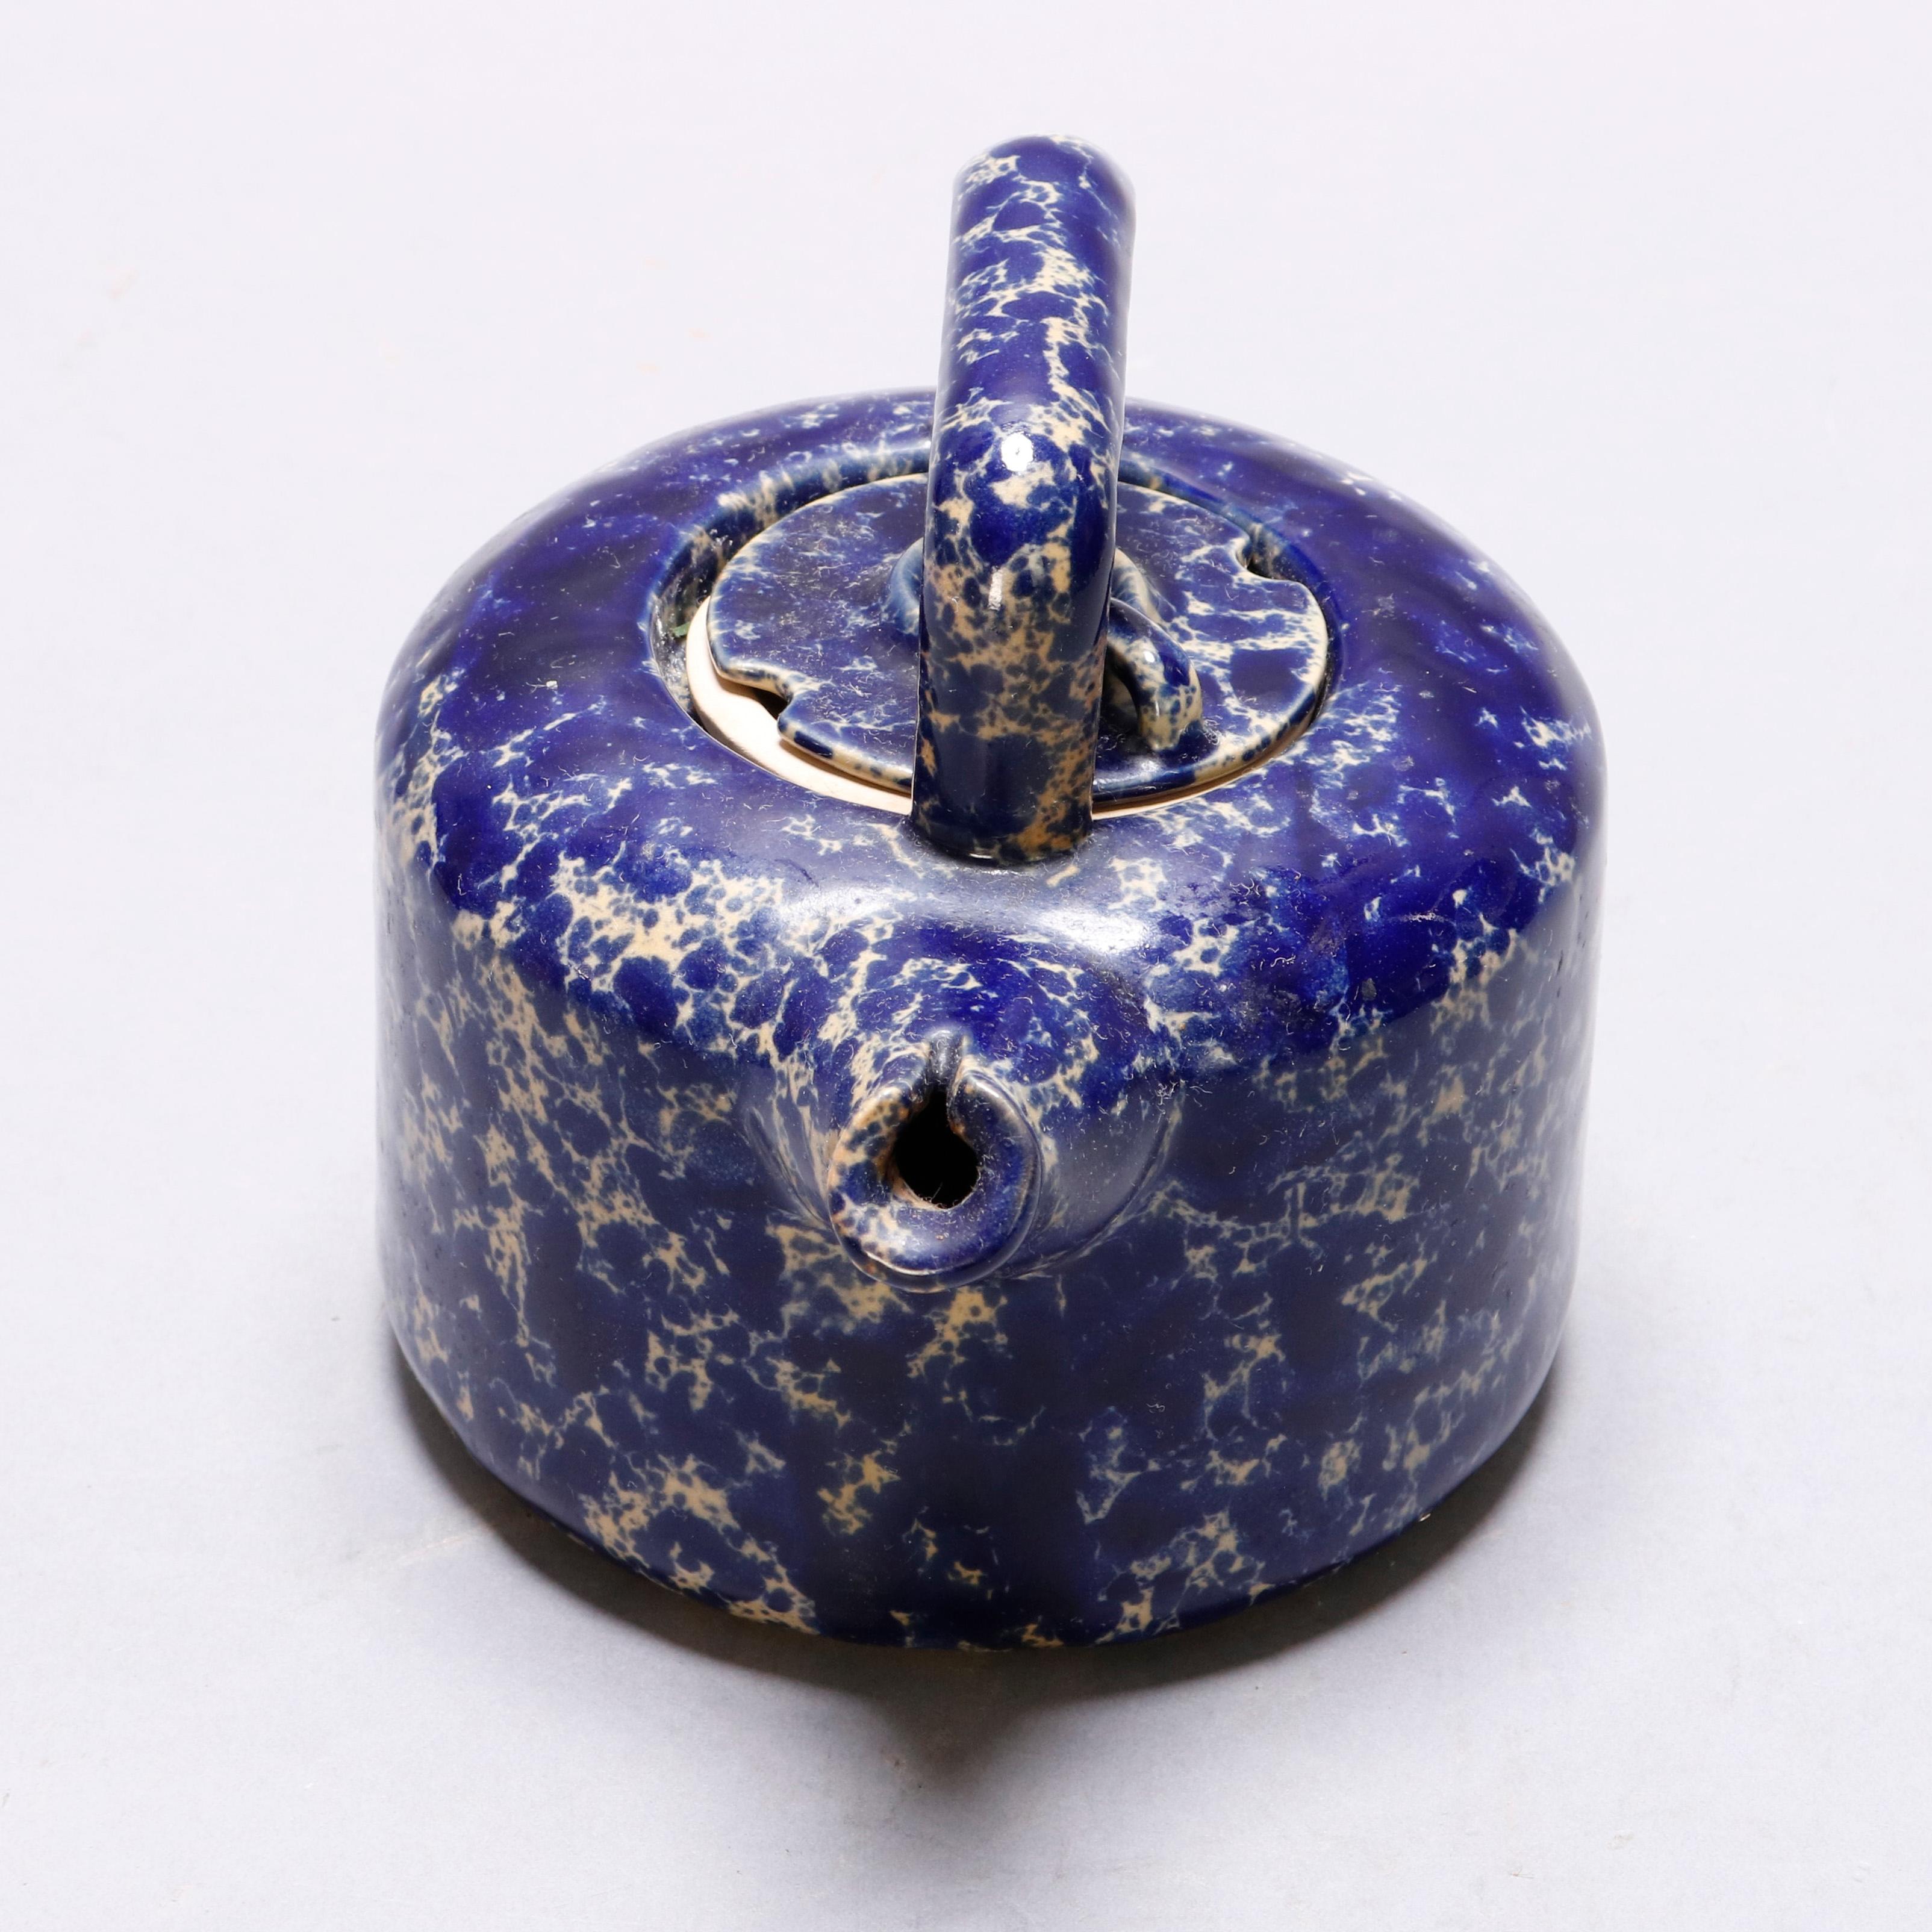 American Antique Cobalt Blue Sponge Wear Pottery Teapot with Strainer, 19th Century